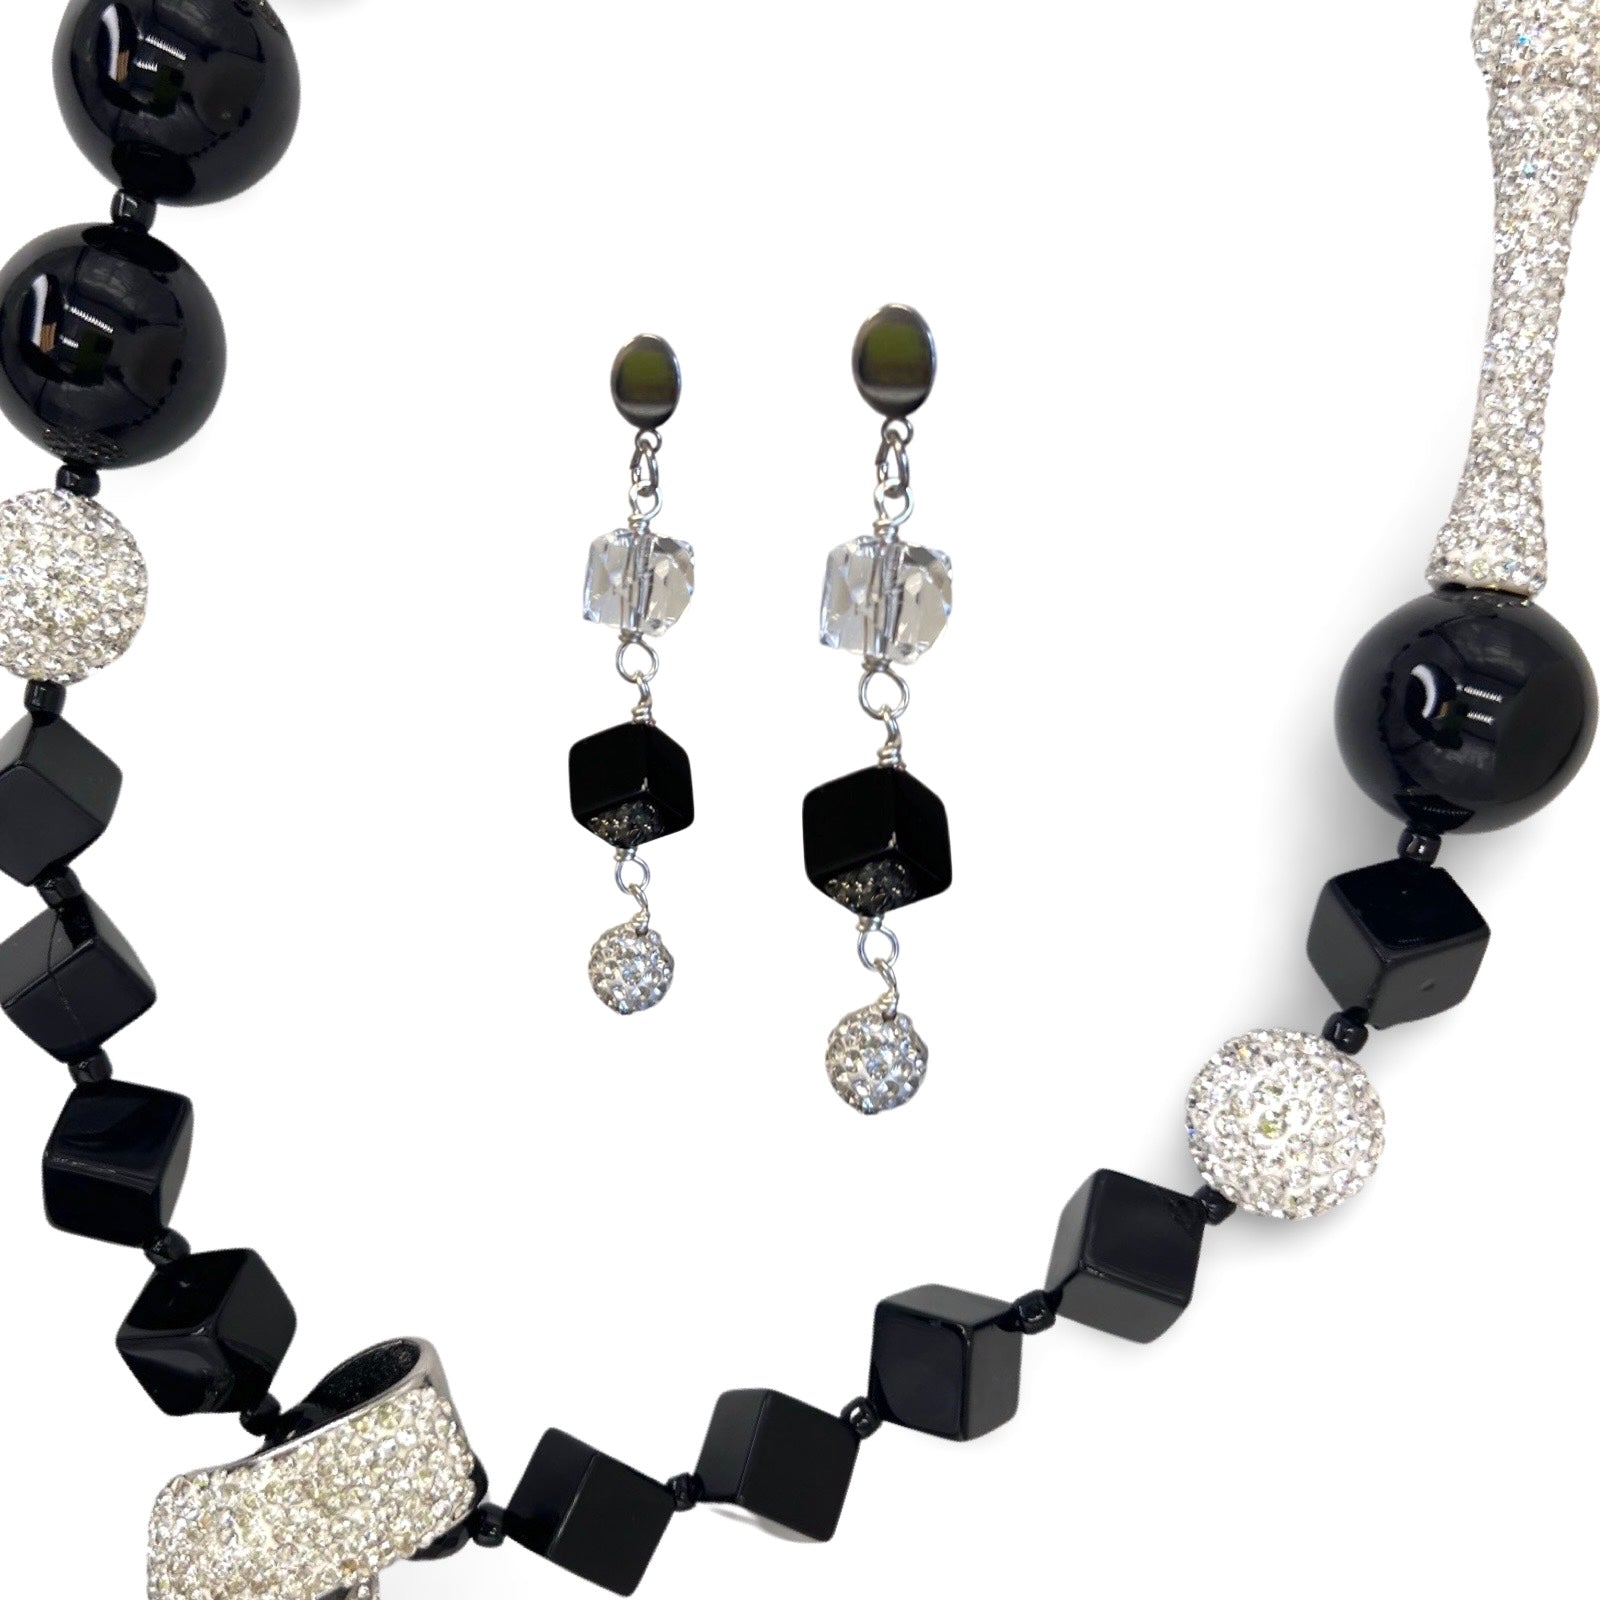 Masked Black Downtown Necklace Necklaces Cerese D, Inc.   